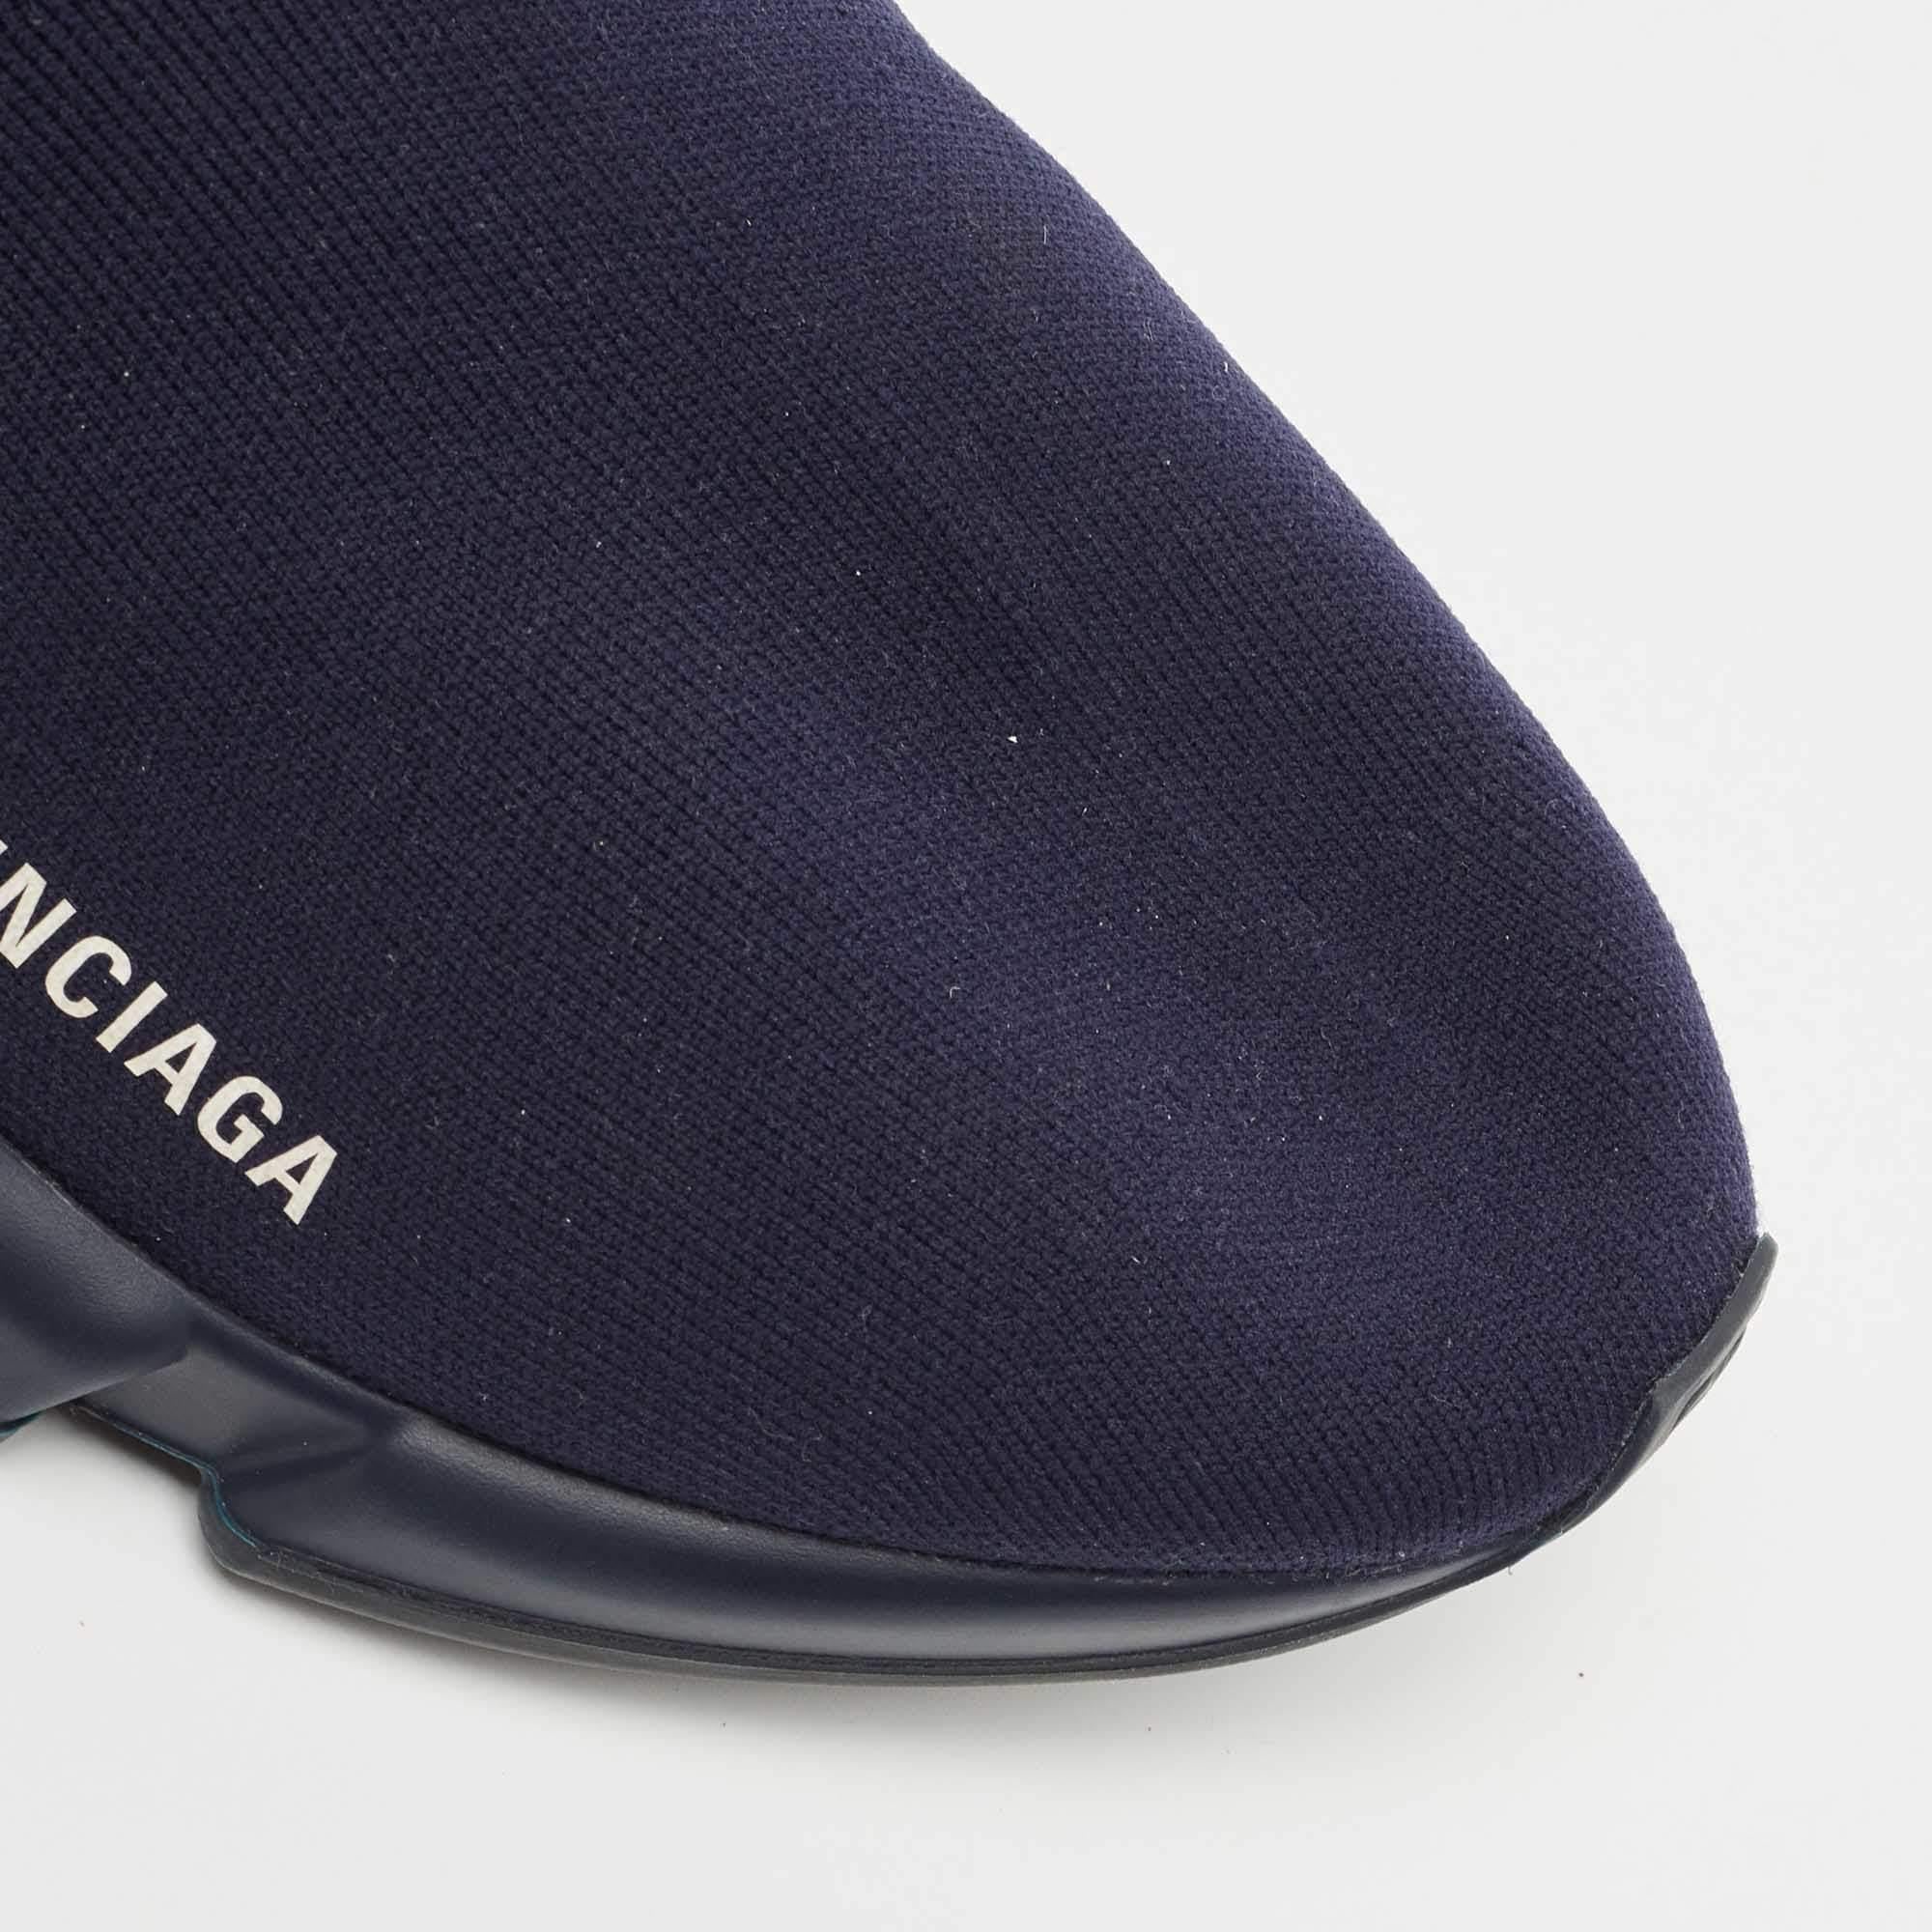 Balanciaga Navy Blue Knit Fabric High Top Sneakers Size 43 3